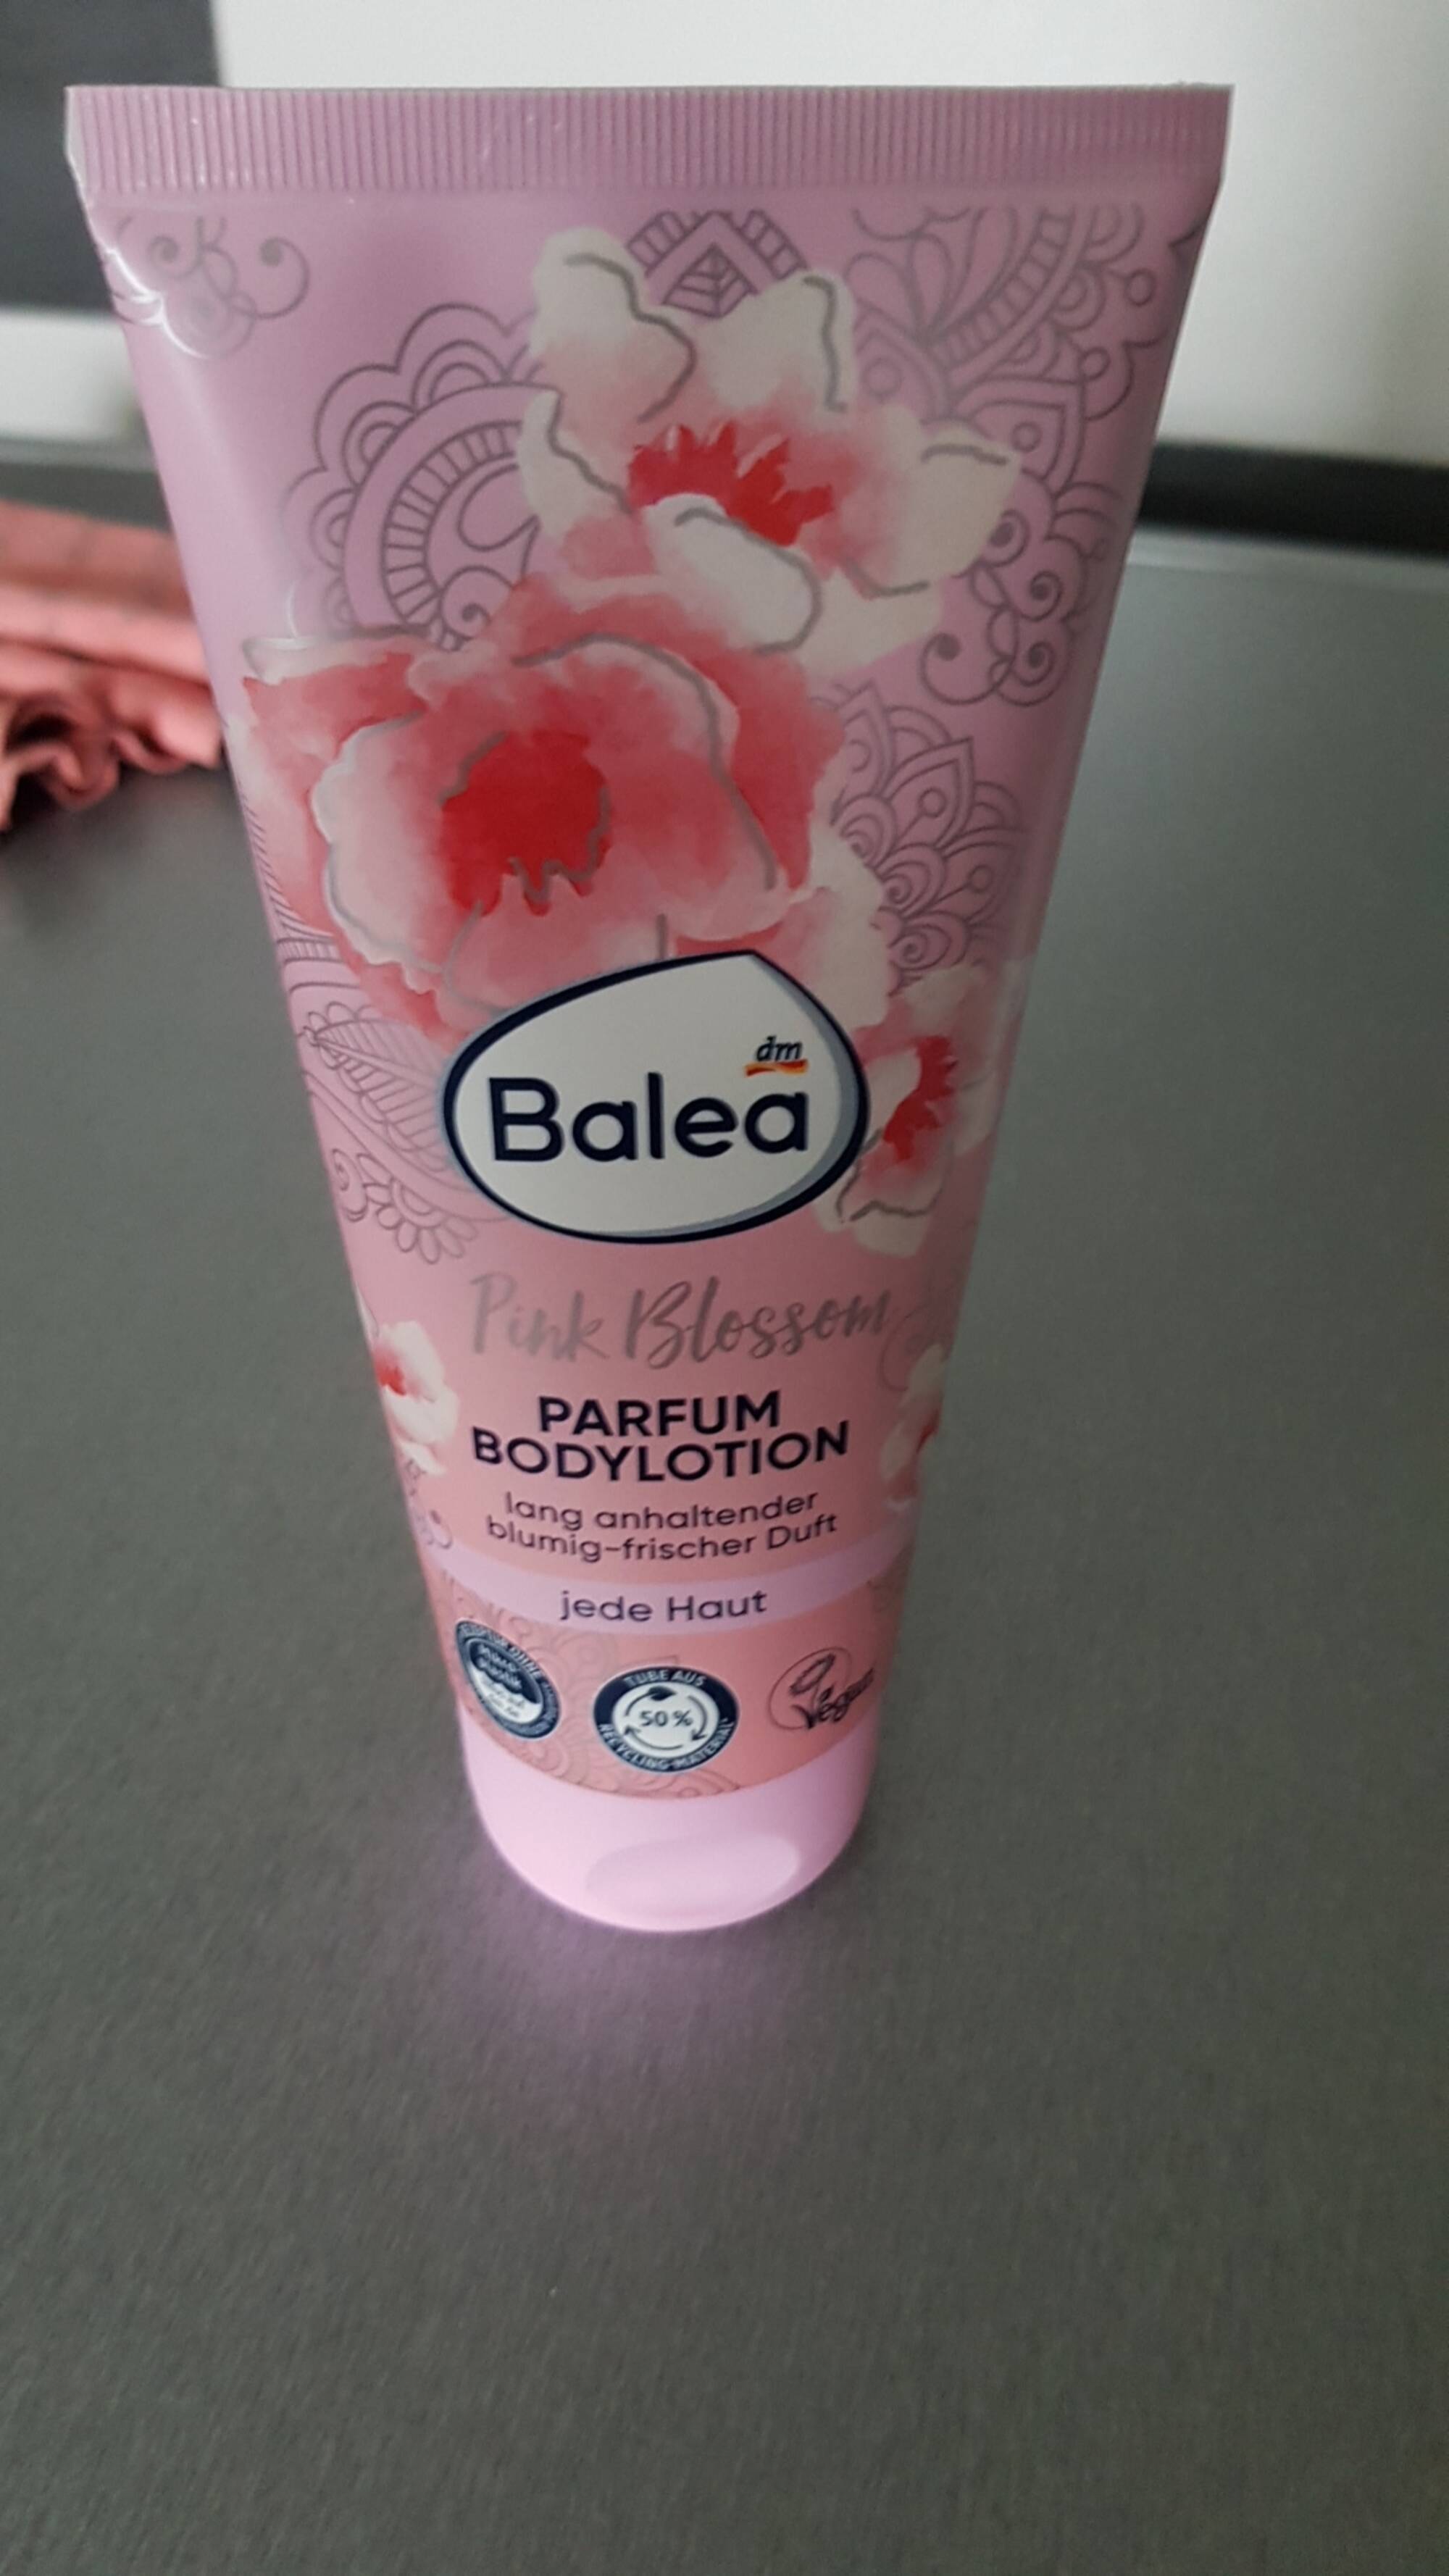 BALEA - Pink blossom - Parfum body lotion